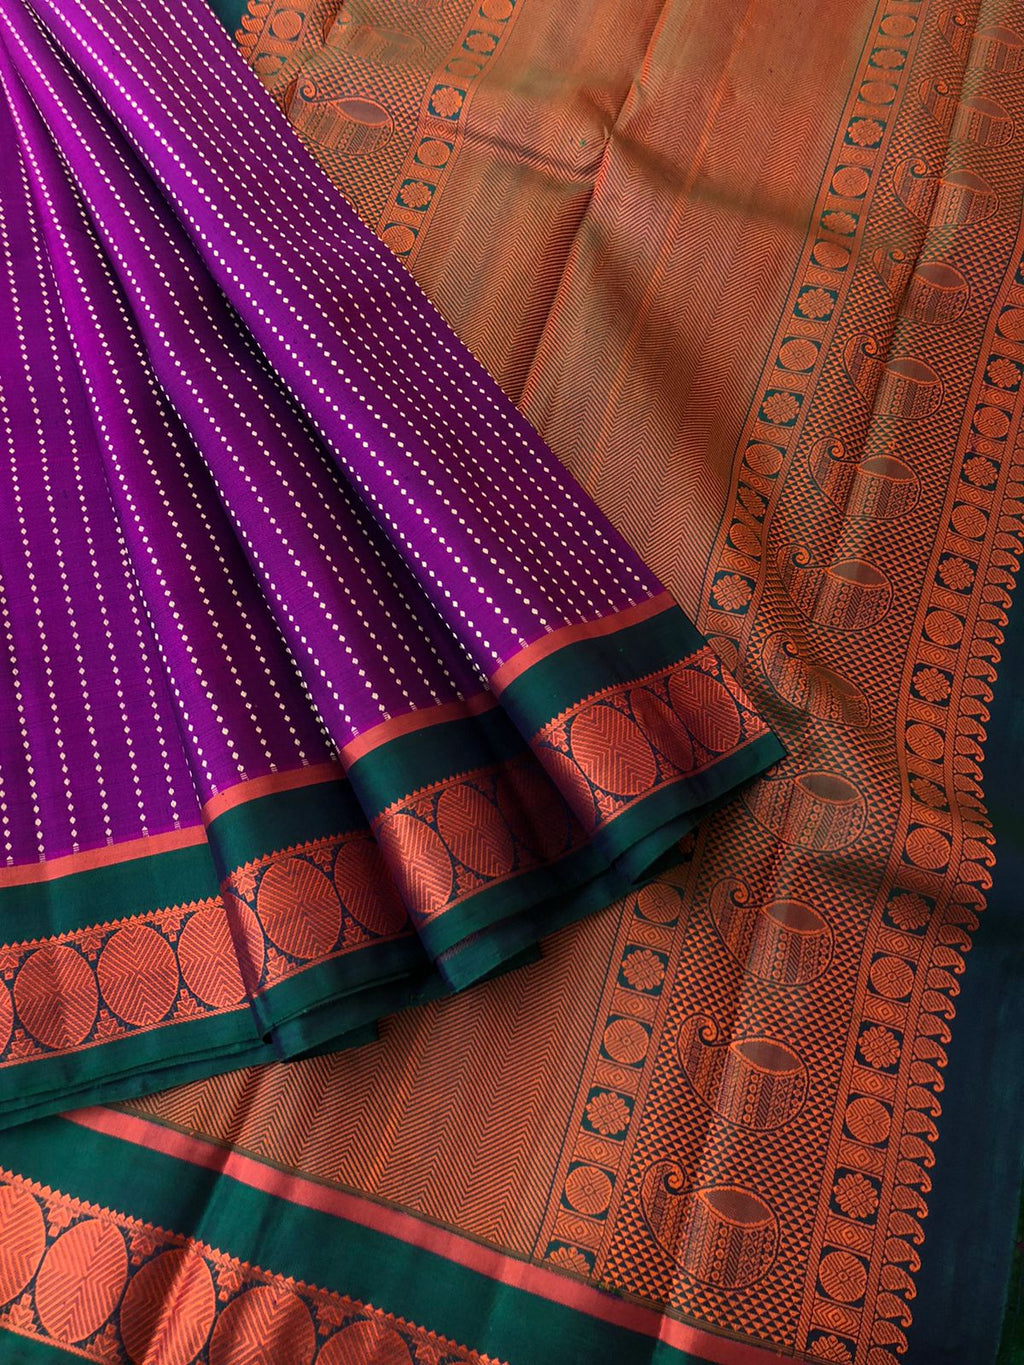 Leela - Legacy Of Kanchivarams - amazing deep dark purple no zari Kanchivaram with copper tone silk thread woven motifs